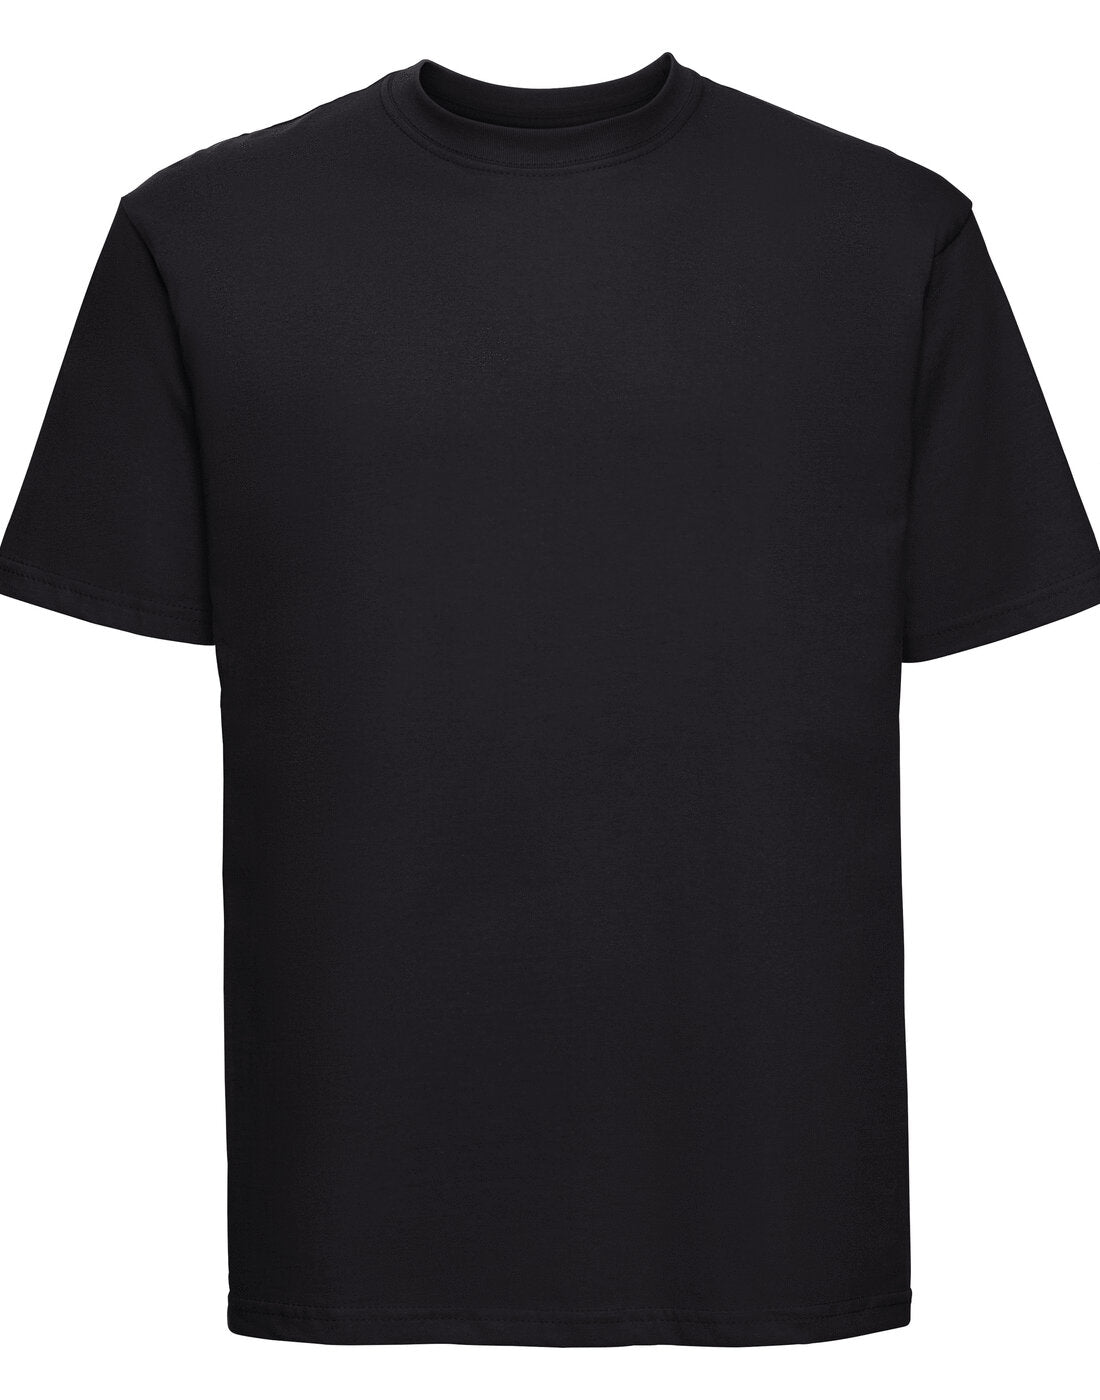 Russell Classic Unisex T-Shirt - Black